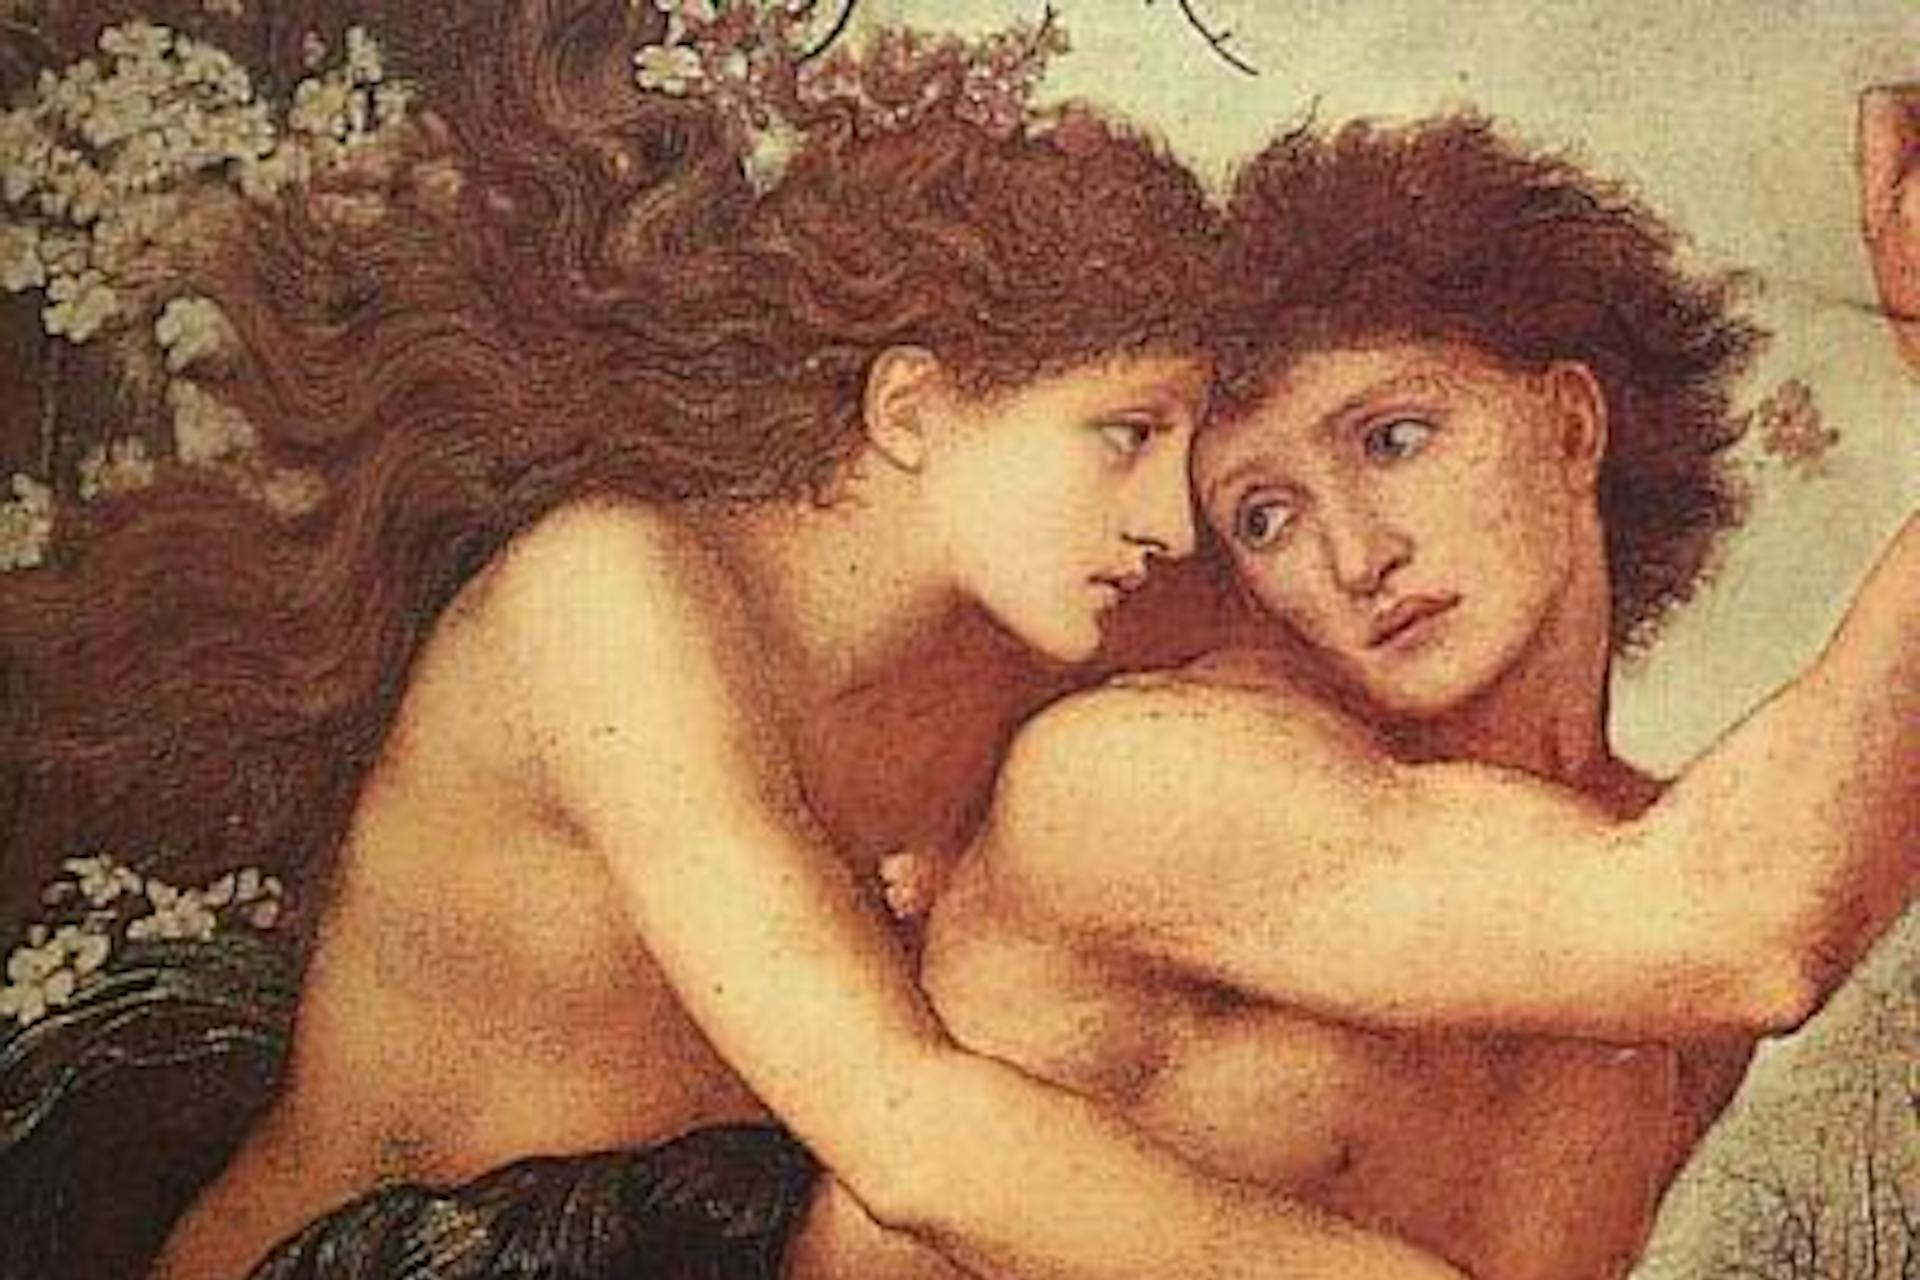 Phyllis and Demophon by Edward Burne-Jones